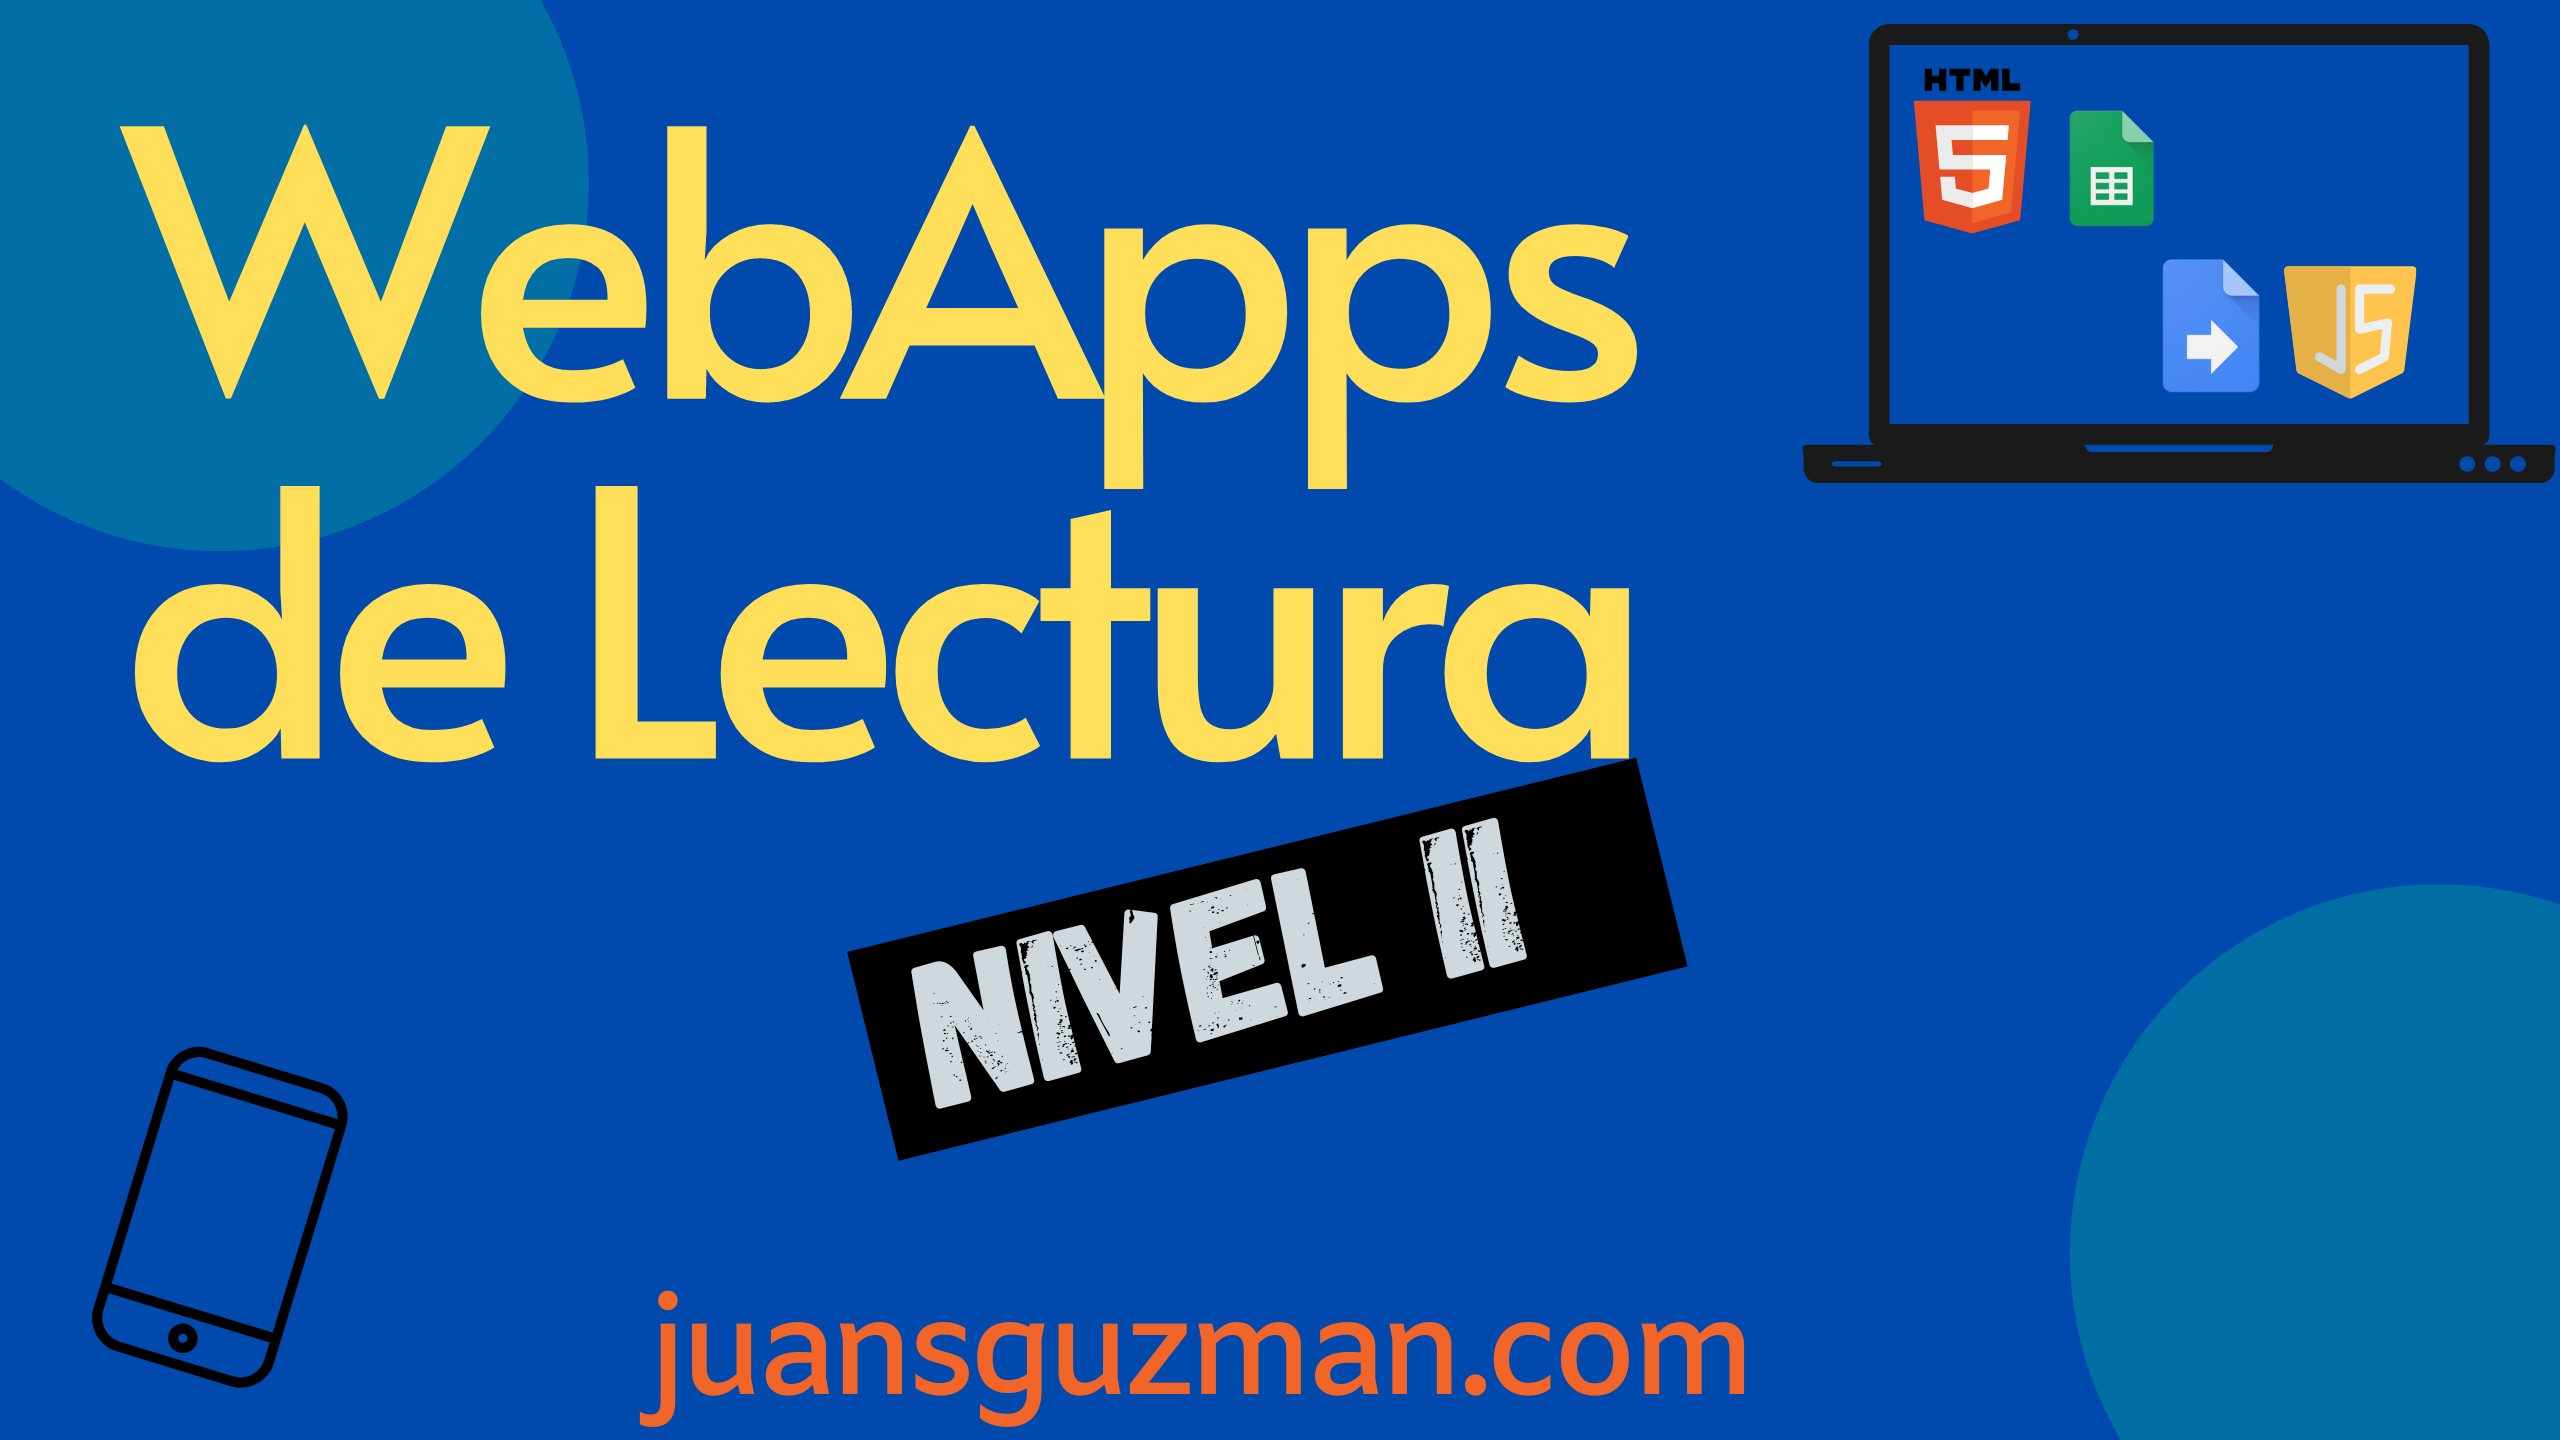 WebApps de Lectura - Nivel Intermedio